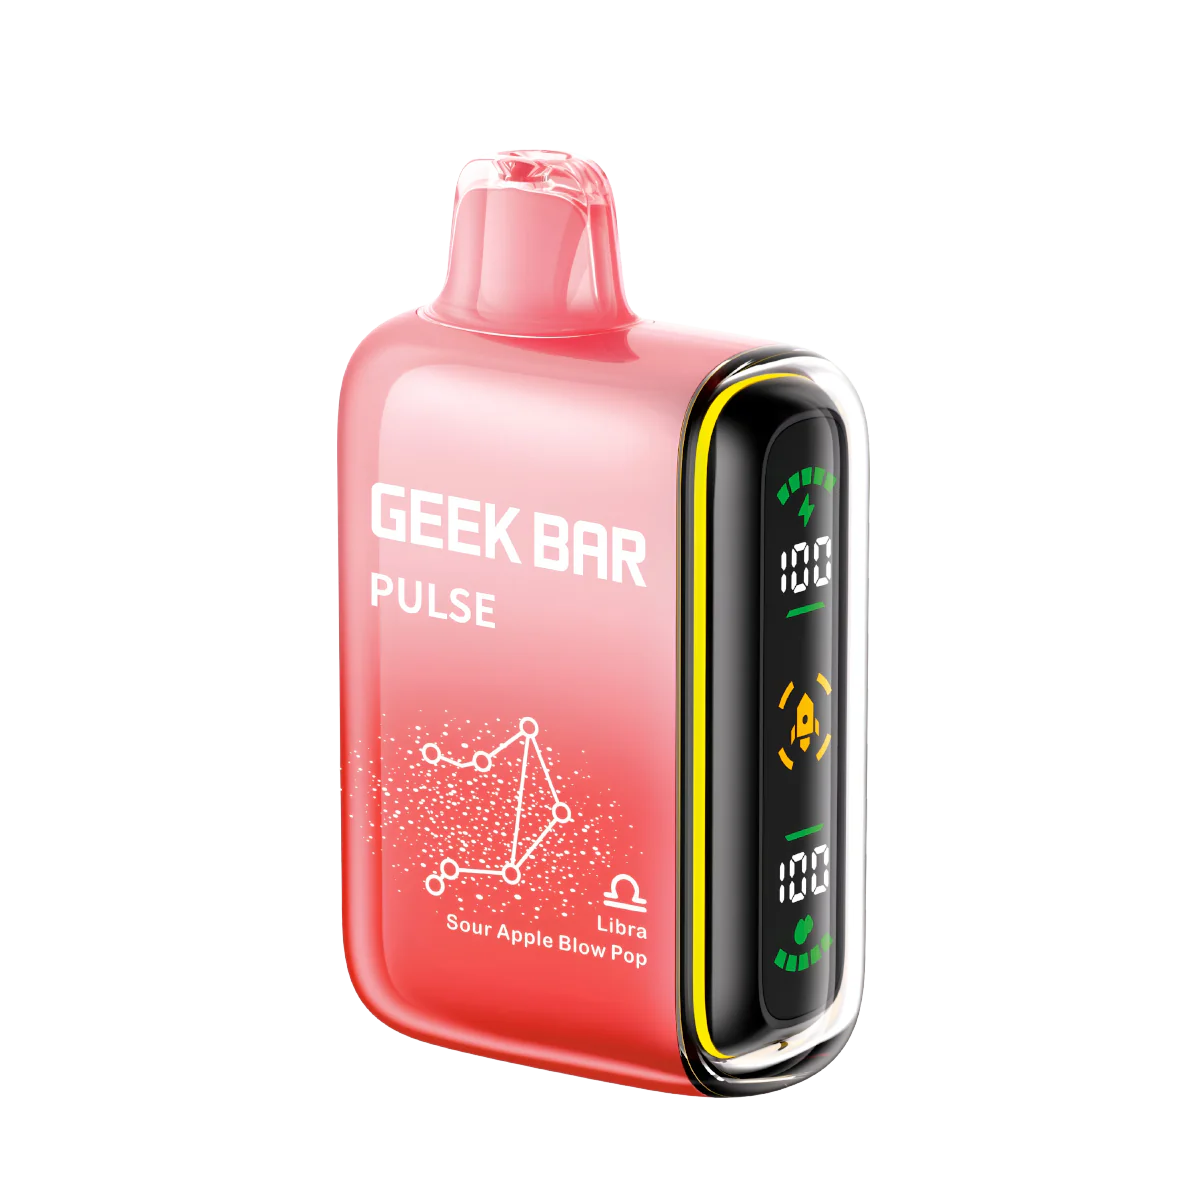 Libra Sour Apple Blow Pop Geek Bar Pulse 15000 206VR816